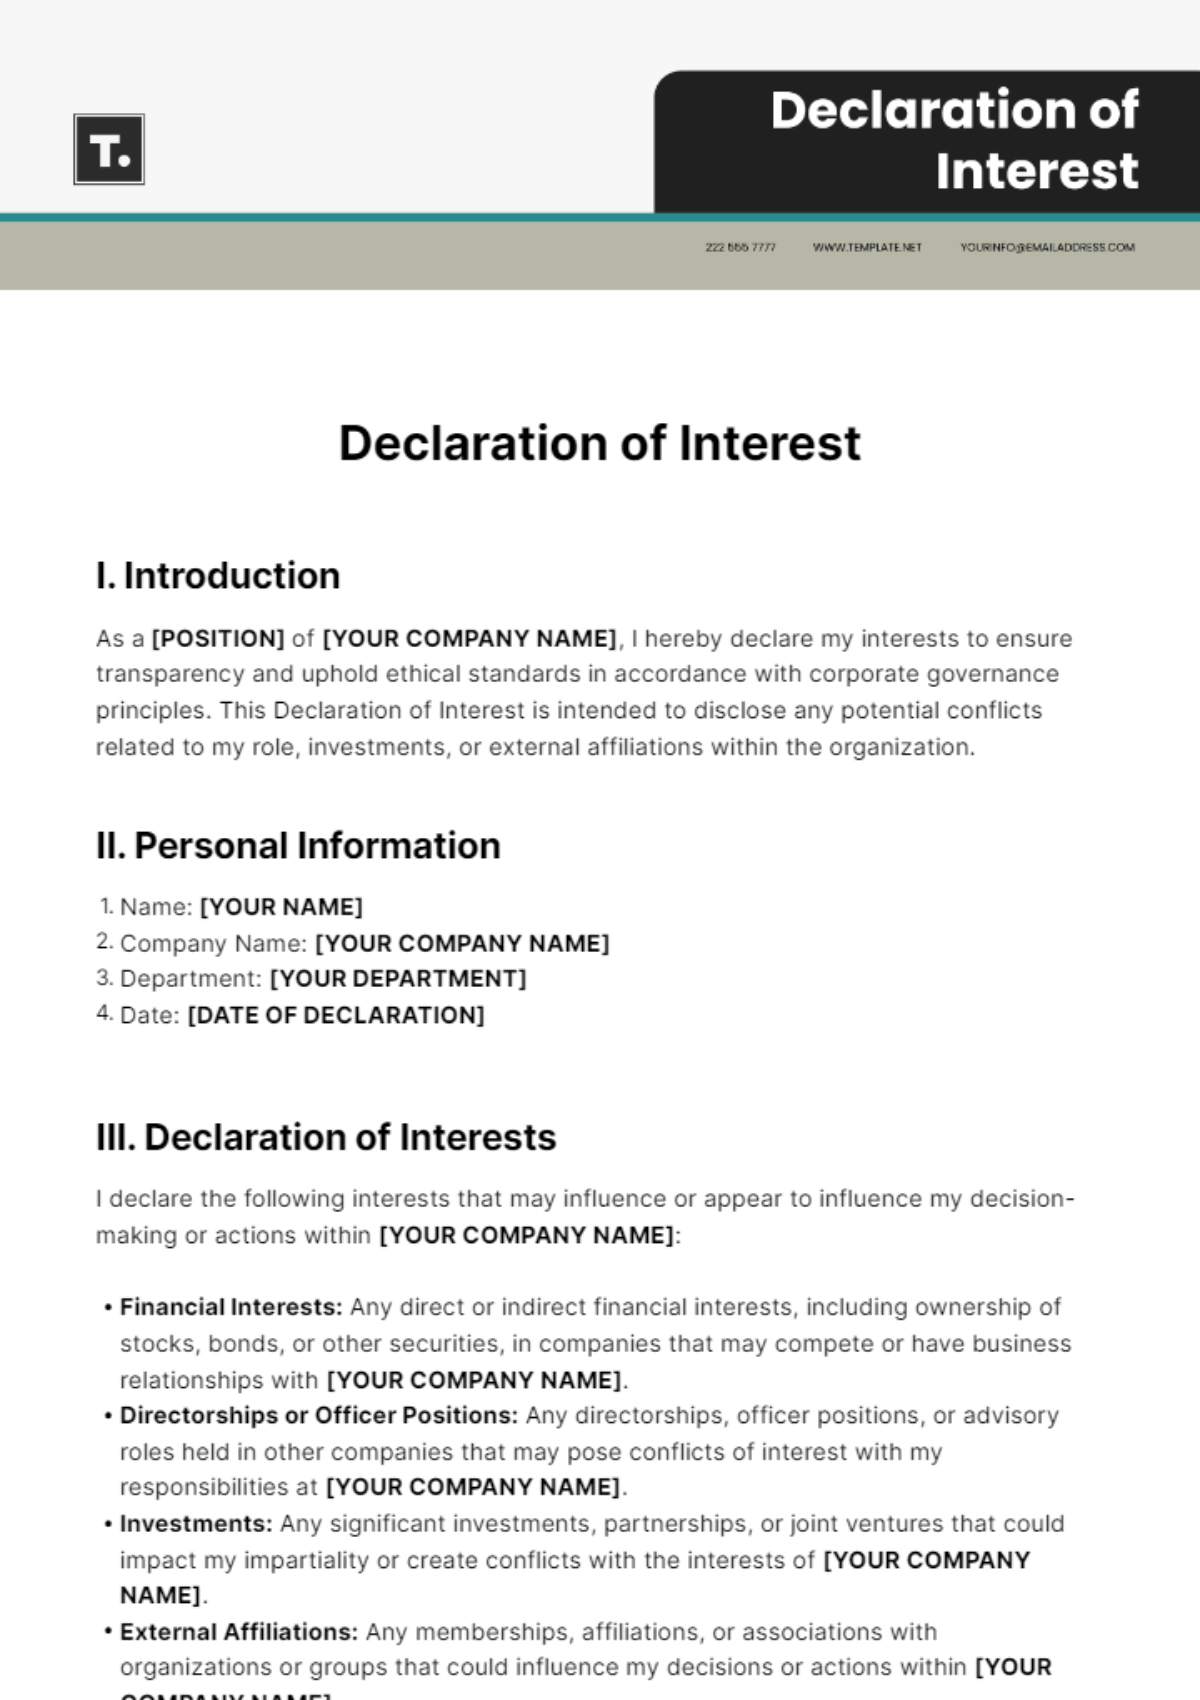 Declaration of Interest Template